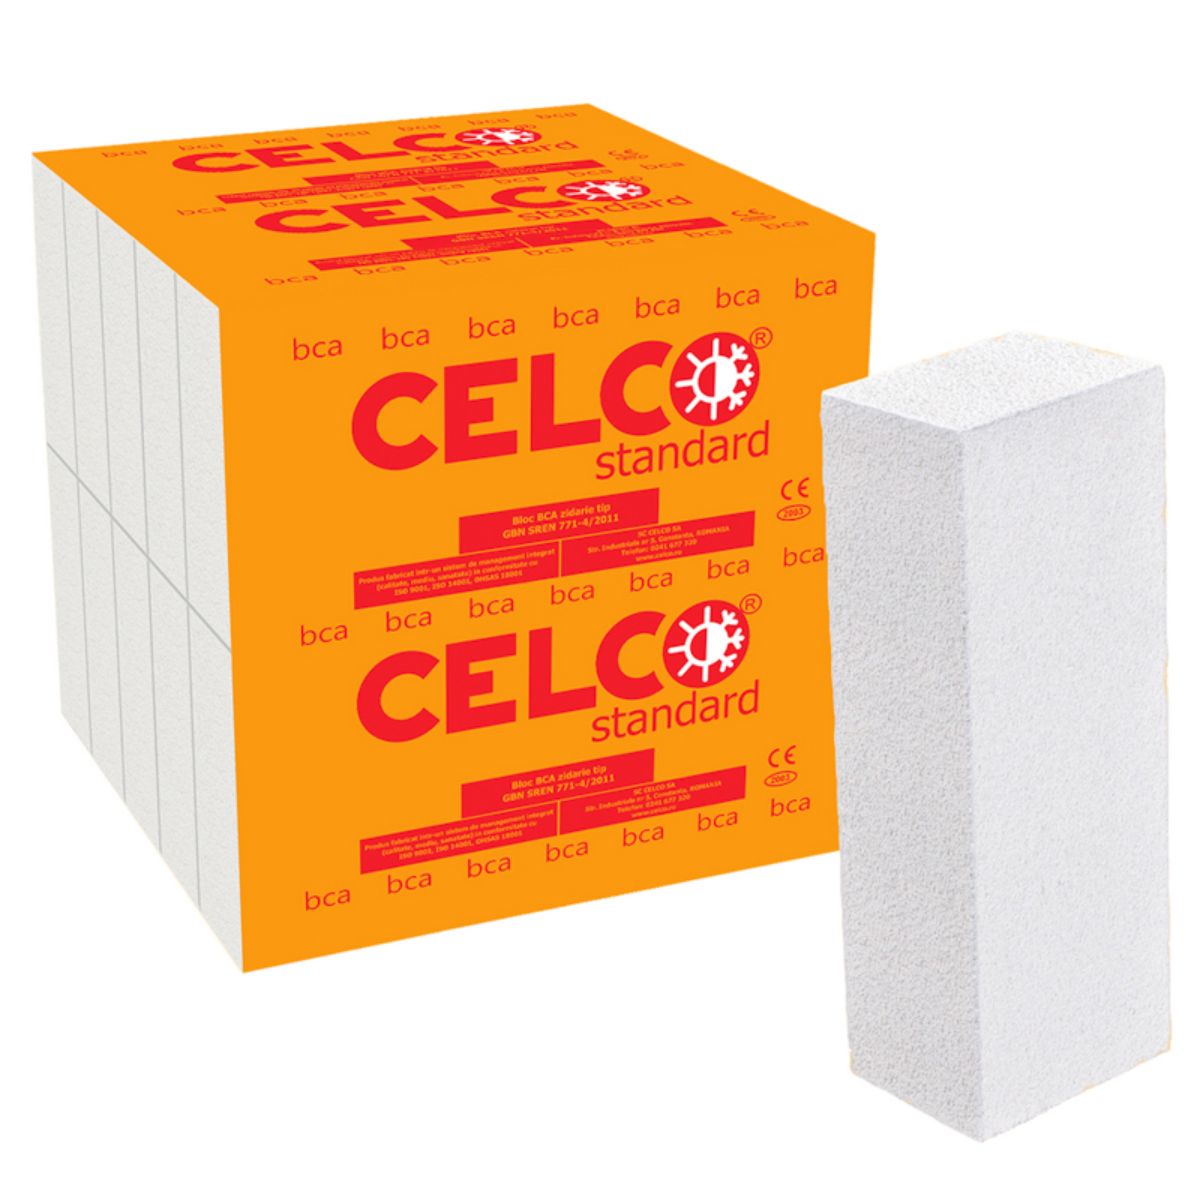 BCA Celco Standard A+ 625/350/240